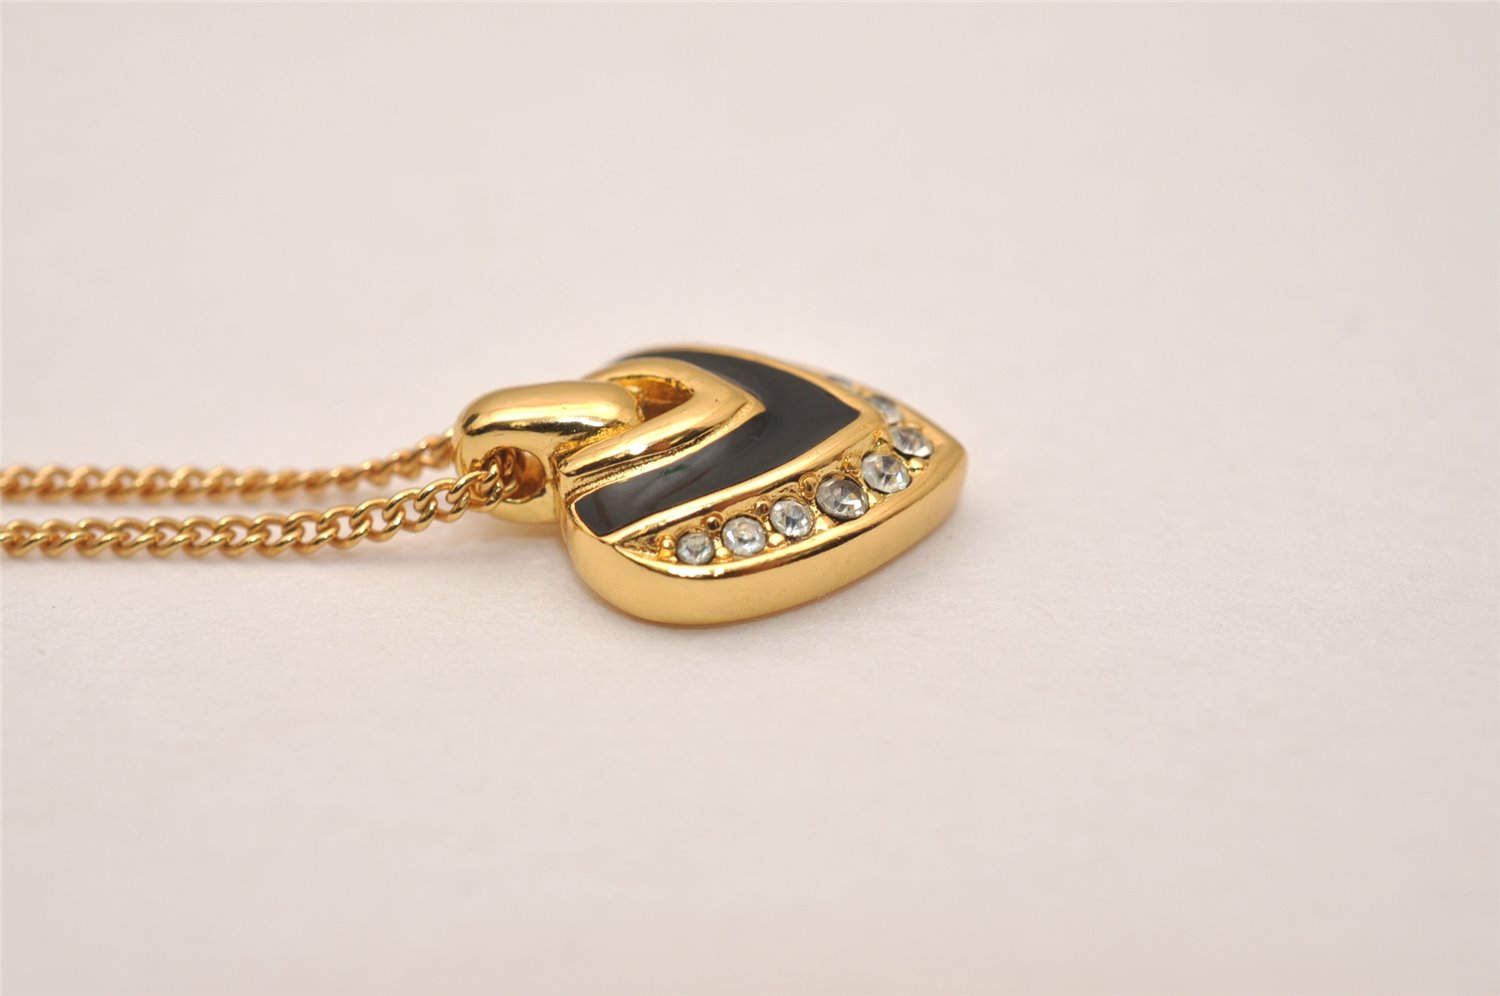 Authentic Christian Dior Gold Tone Rhinestone Chain Pendant Necklace CD 7844J